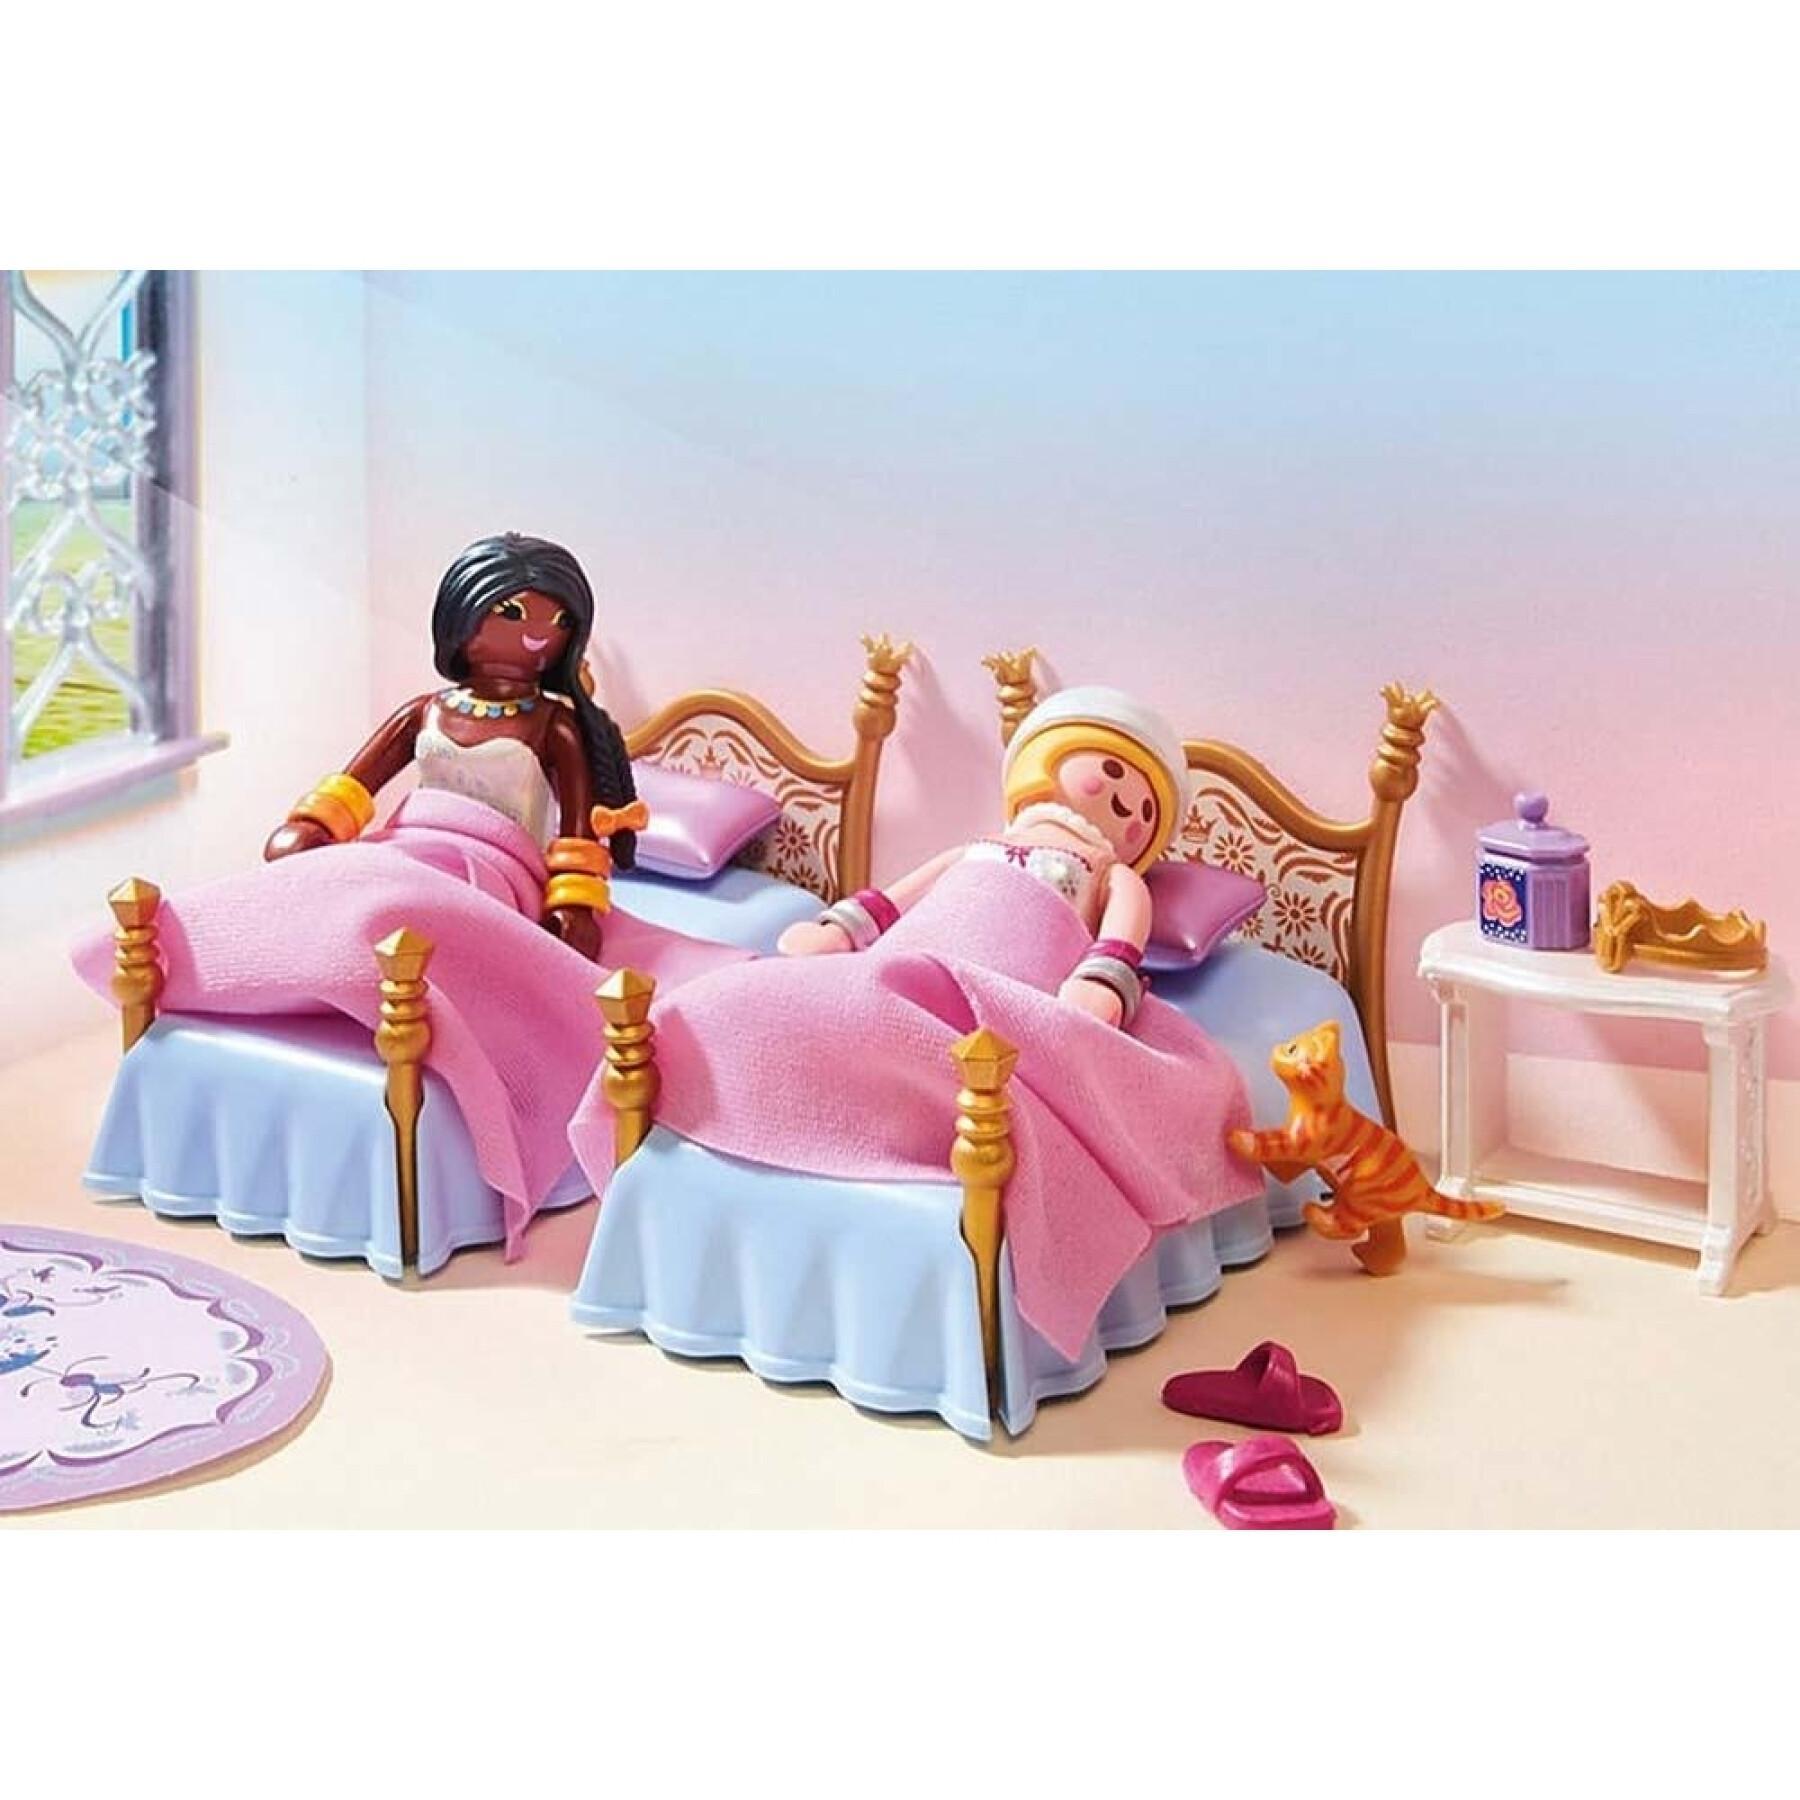 Princesses royal room Playmobil